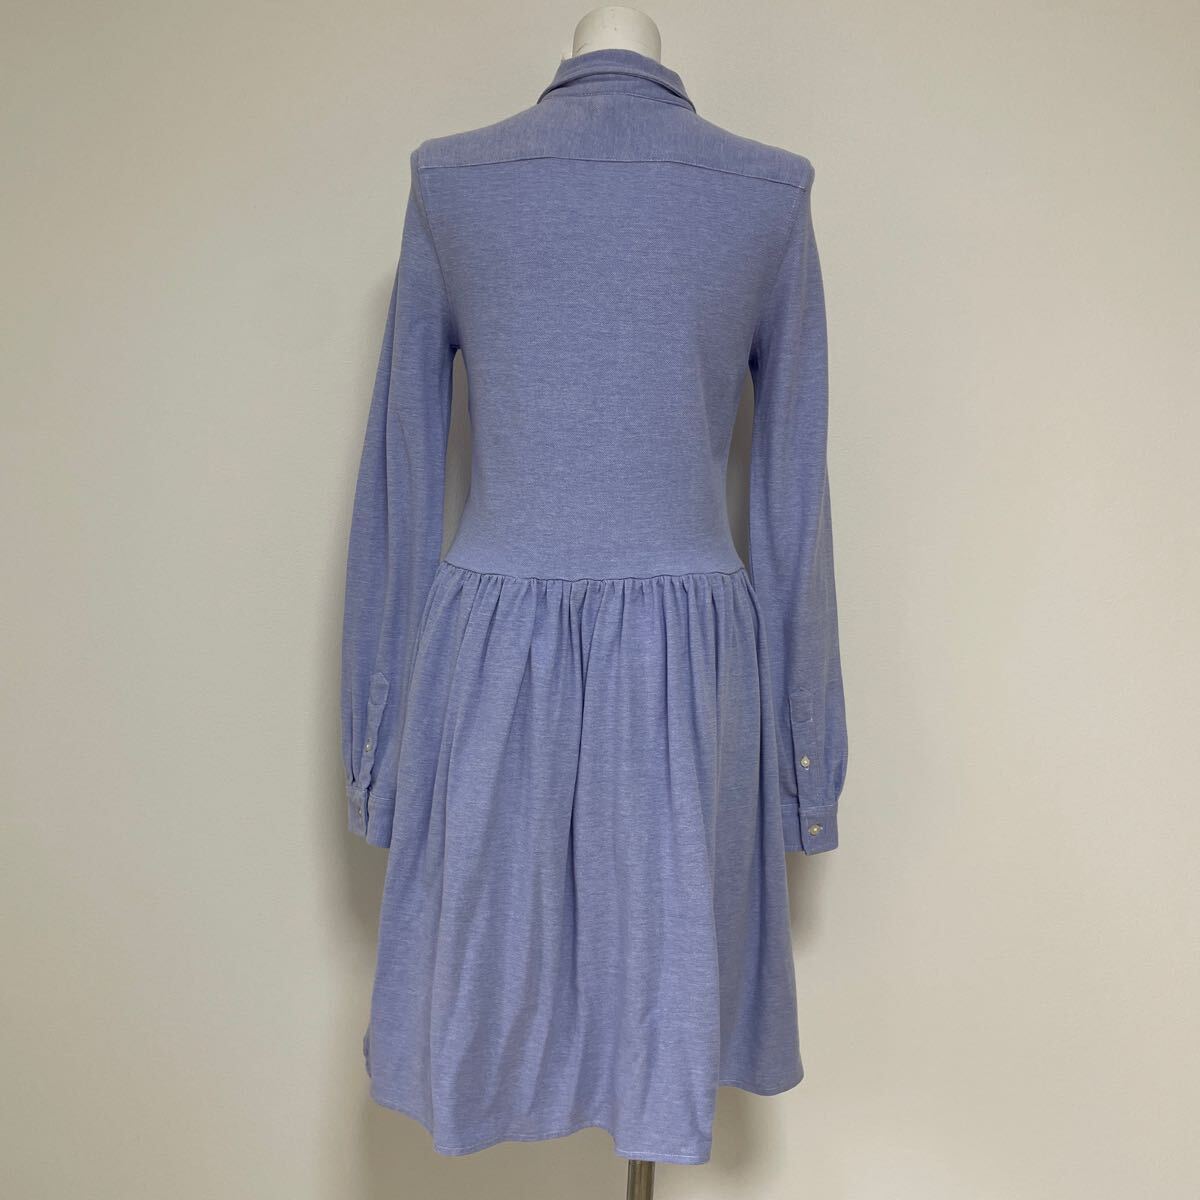 POLORALPH LAUREN Polo Ralph Lauren рубашка-поло One-piece голубой цвет серия девушка размер XL (16)